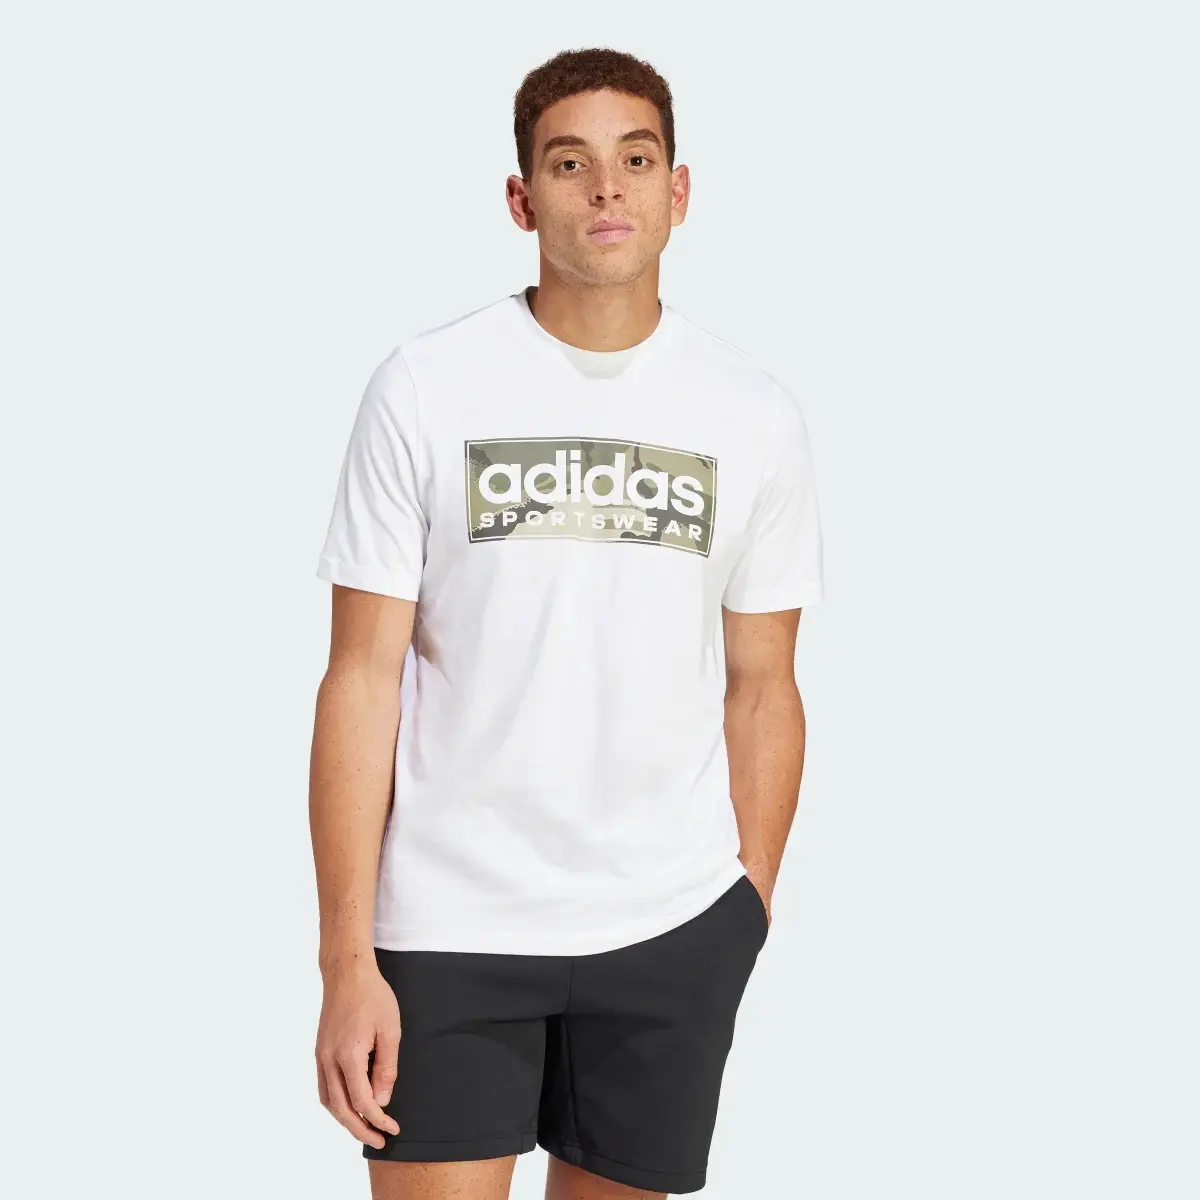 Adidas Camo Linear Graphic T-Shirt. 2